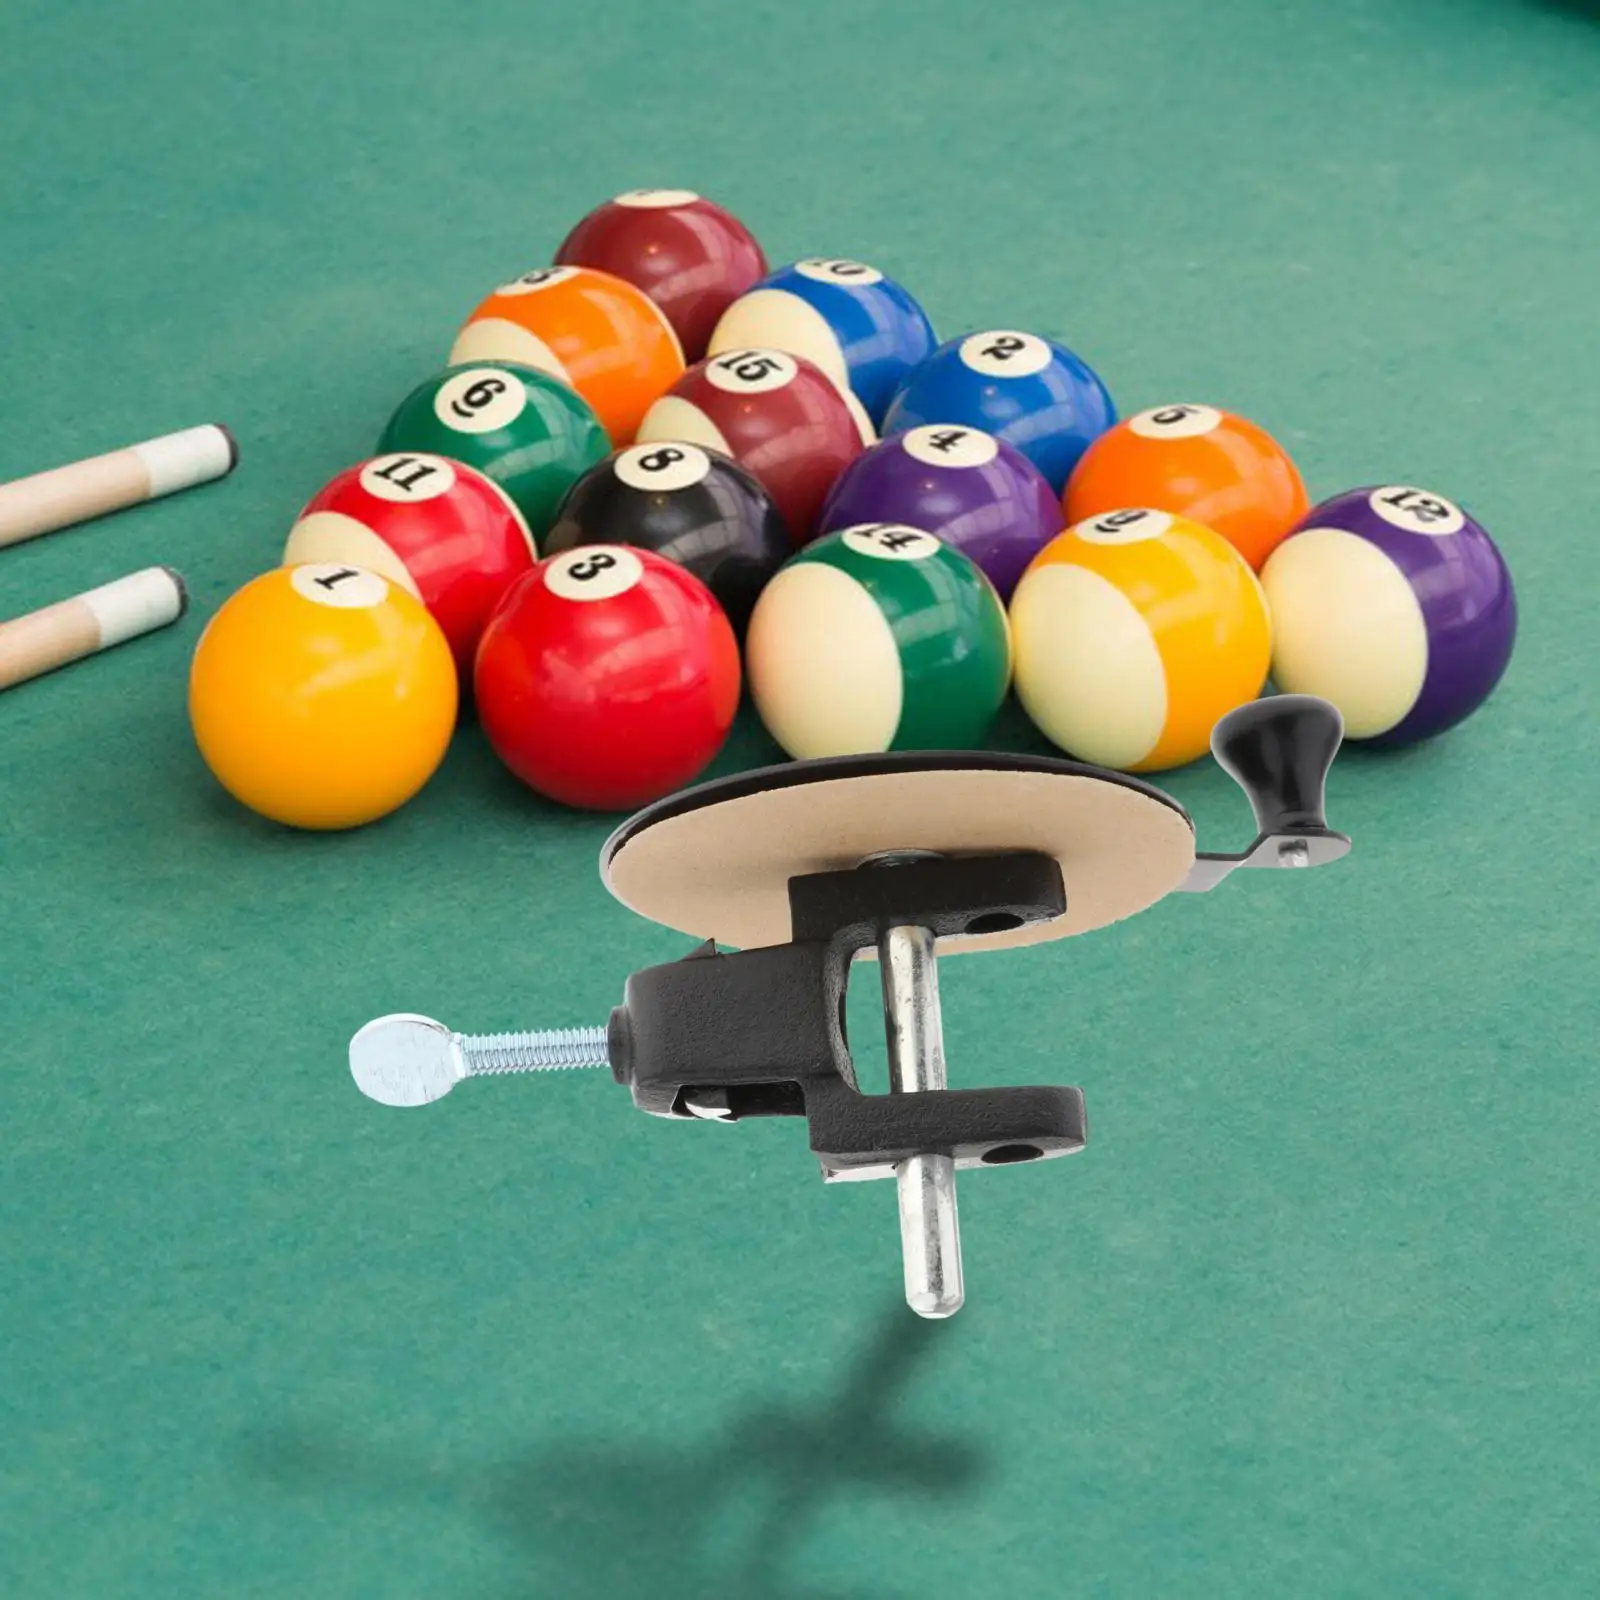 Billiard Pool Cue Tip Sander Billiard Pool Hand Tools for Polishing Forming Maintaining